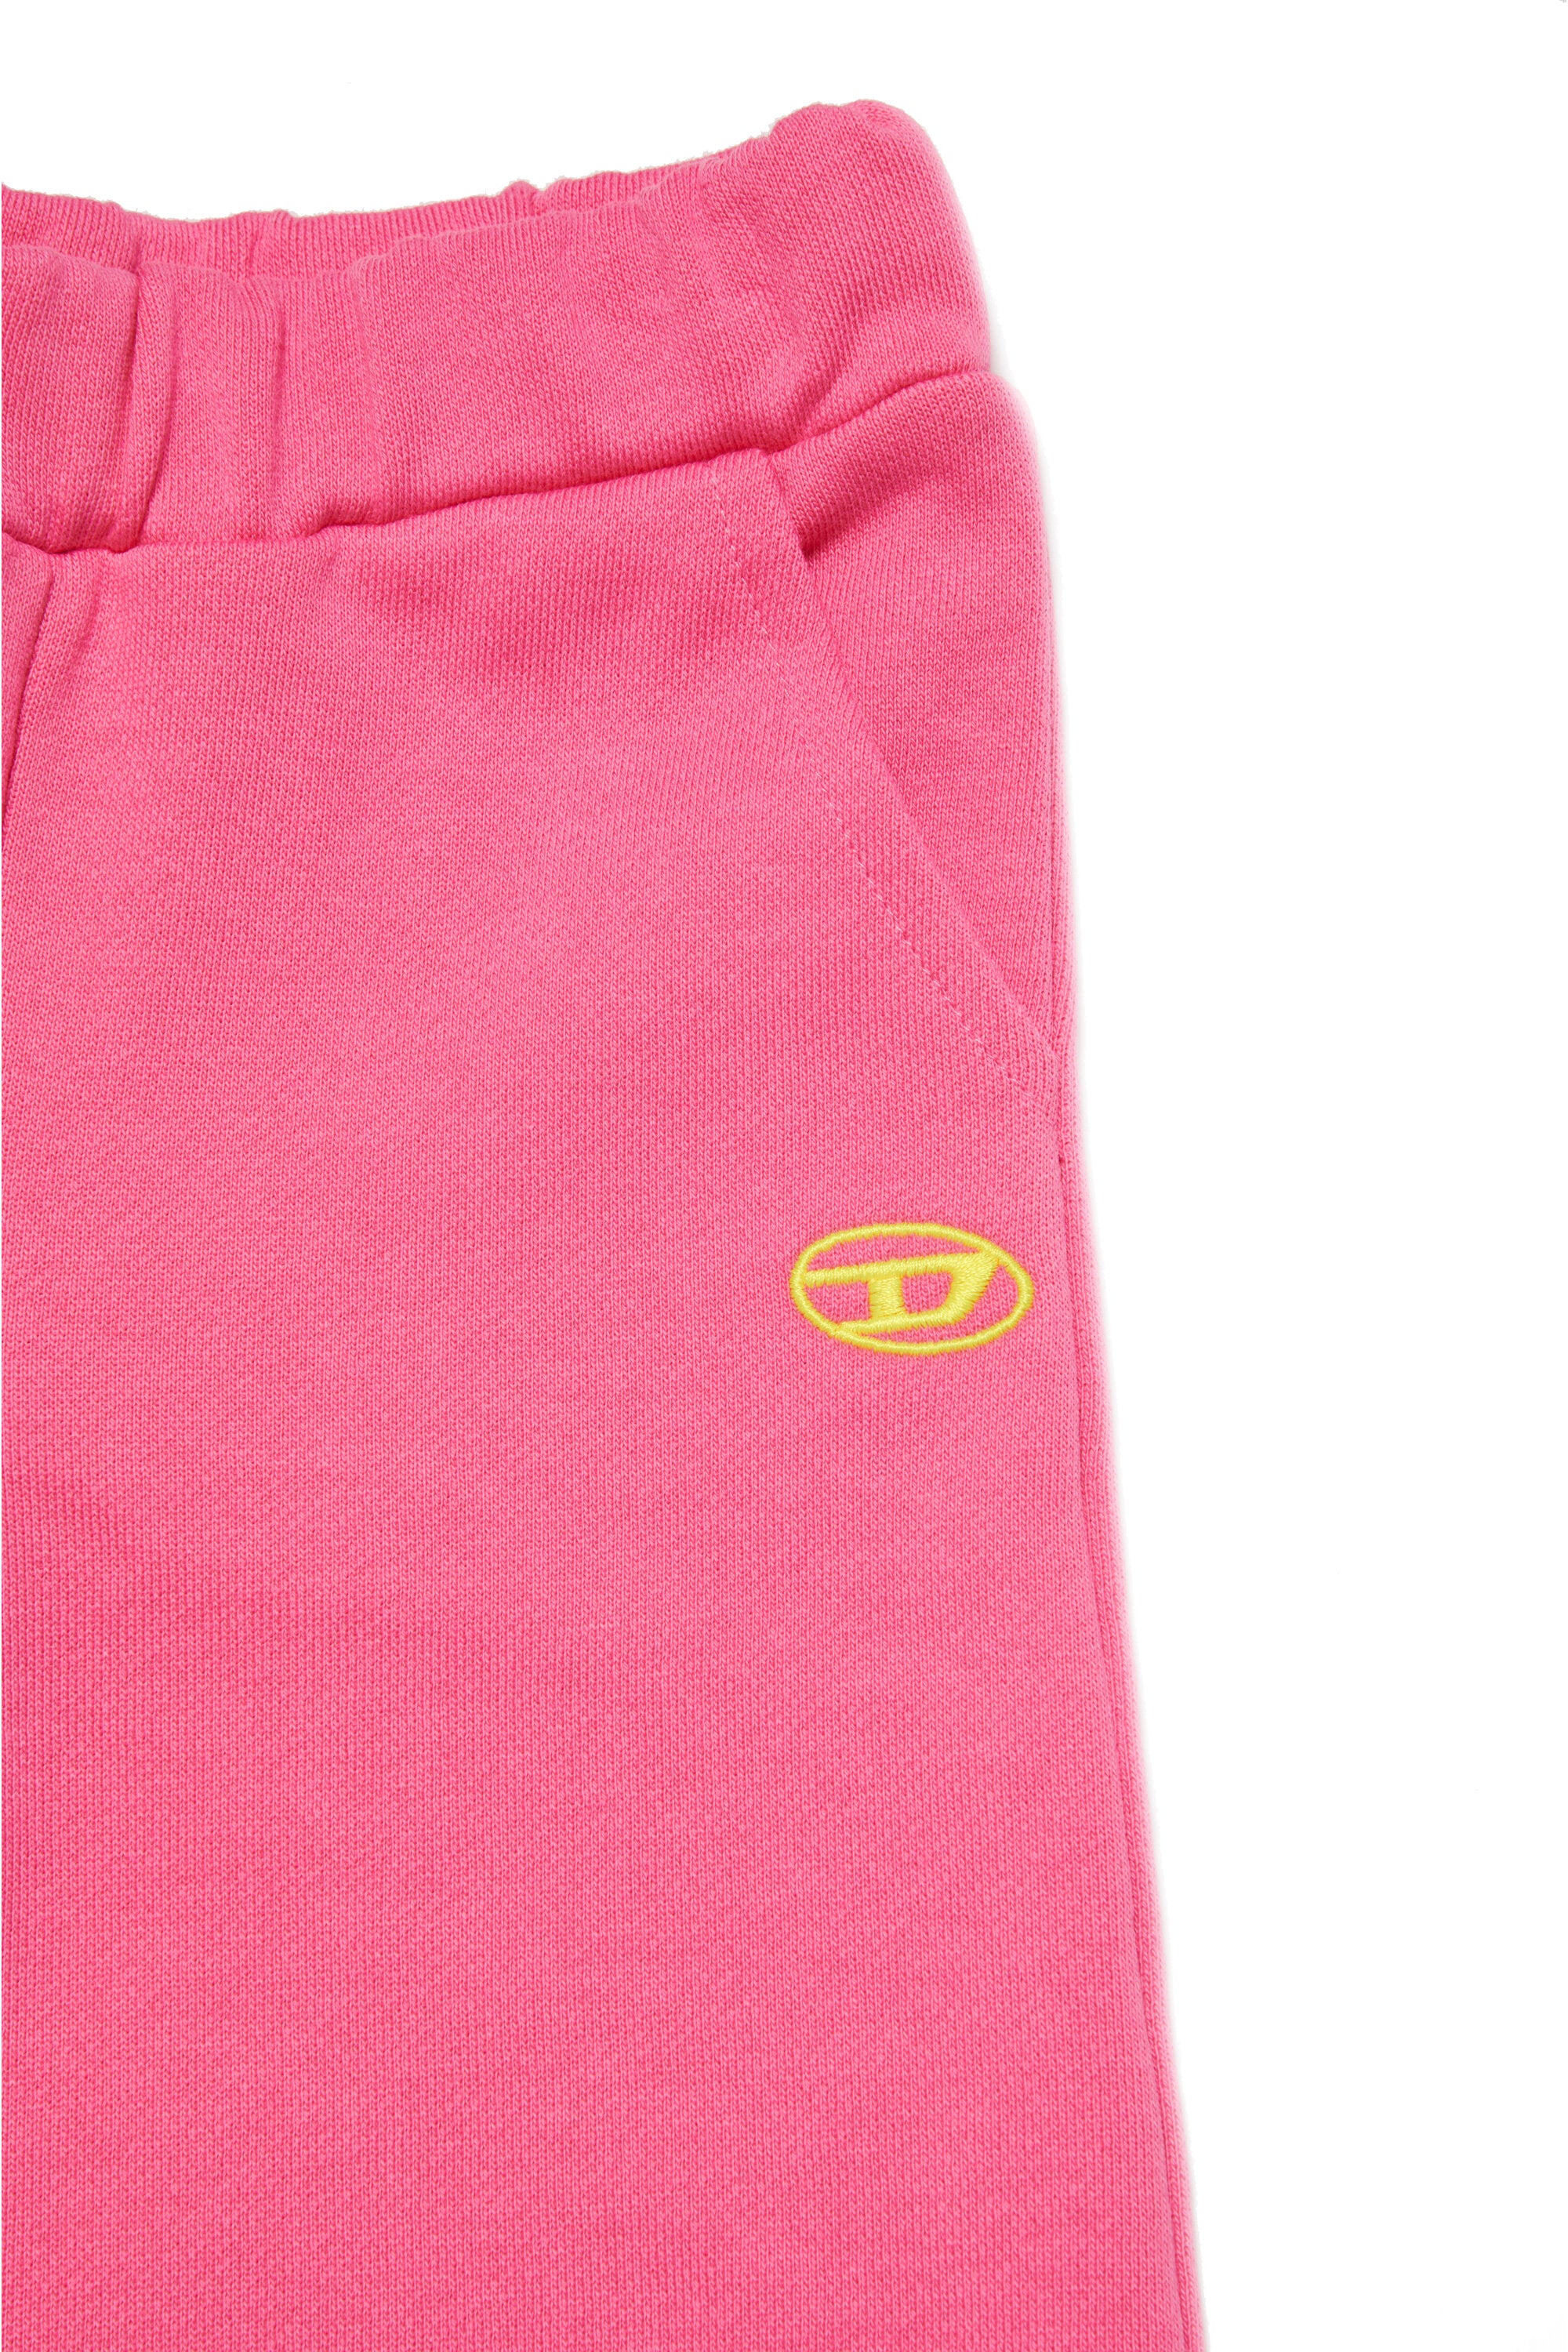 Fleece pants with Oval D logo